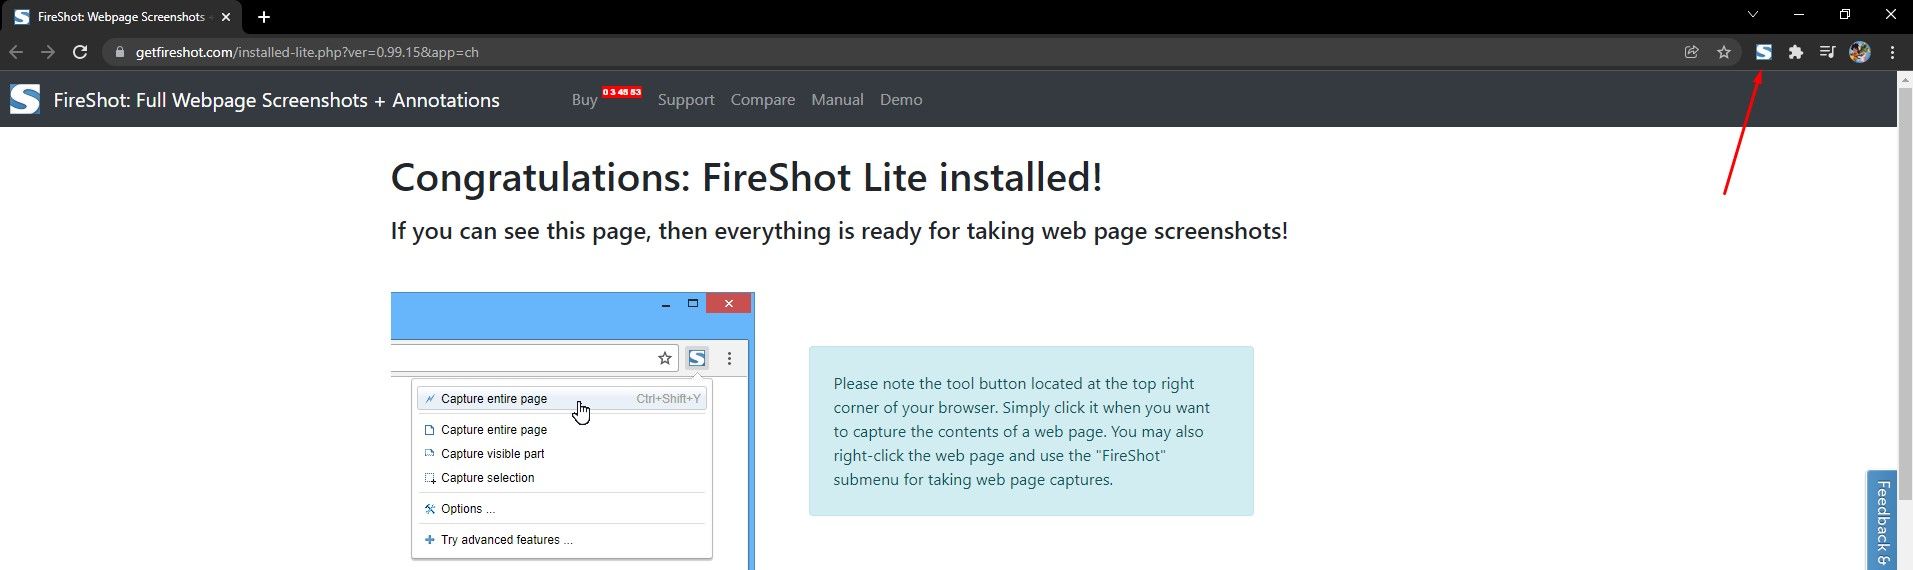 Chrome web store fireshot icon